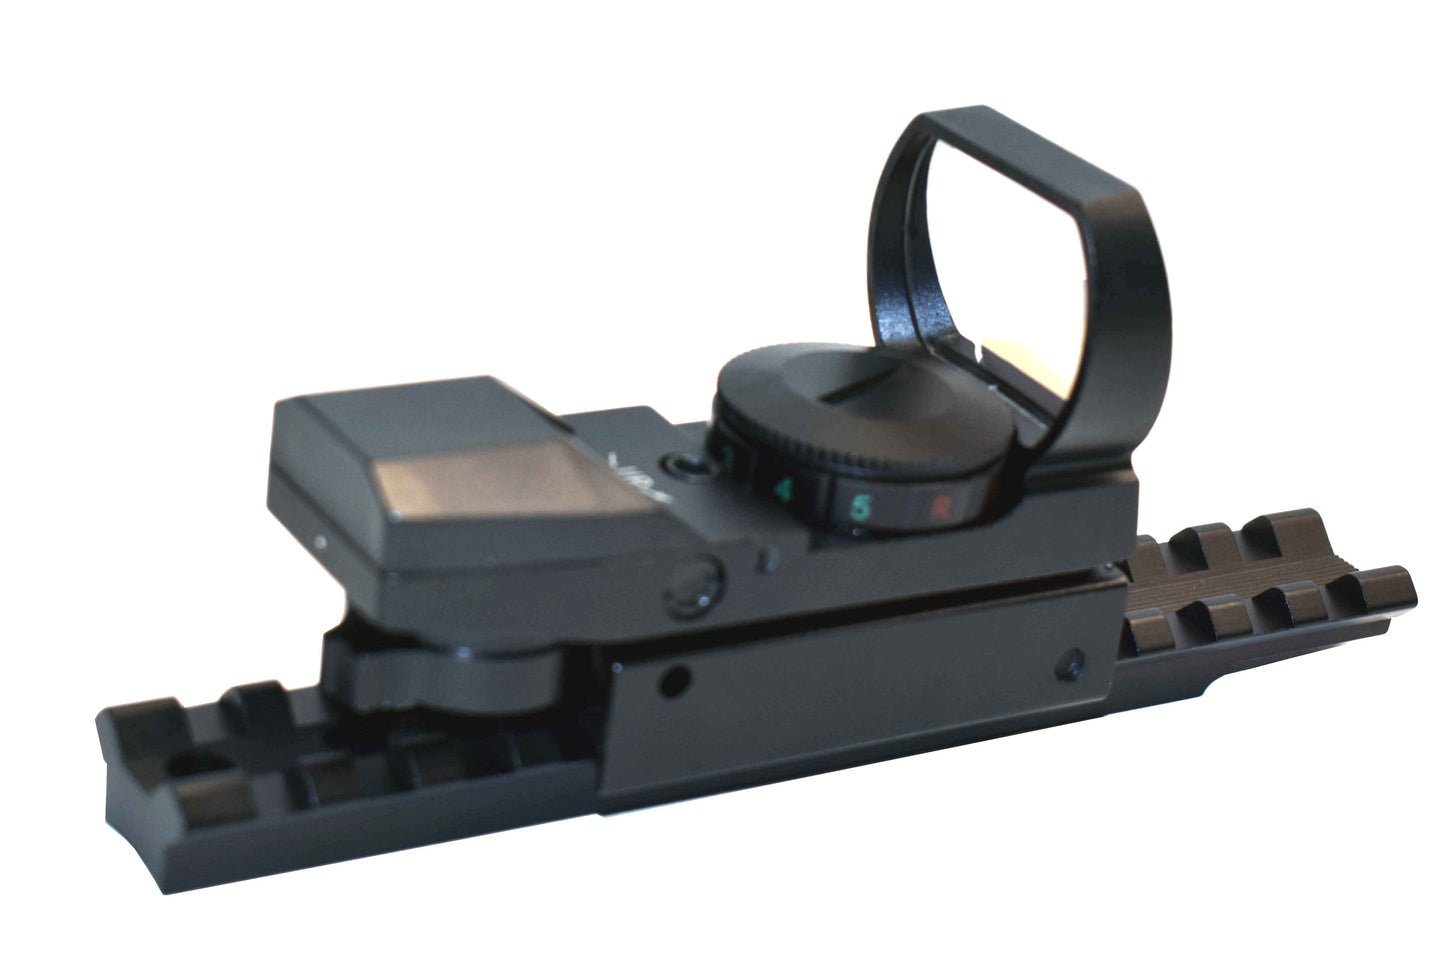 Stoeger M3000 pump 12 gauge reflex sight with base mount combo.